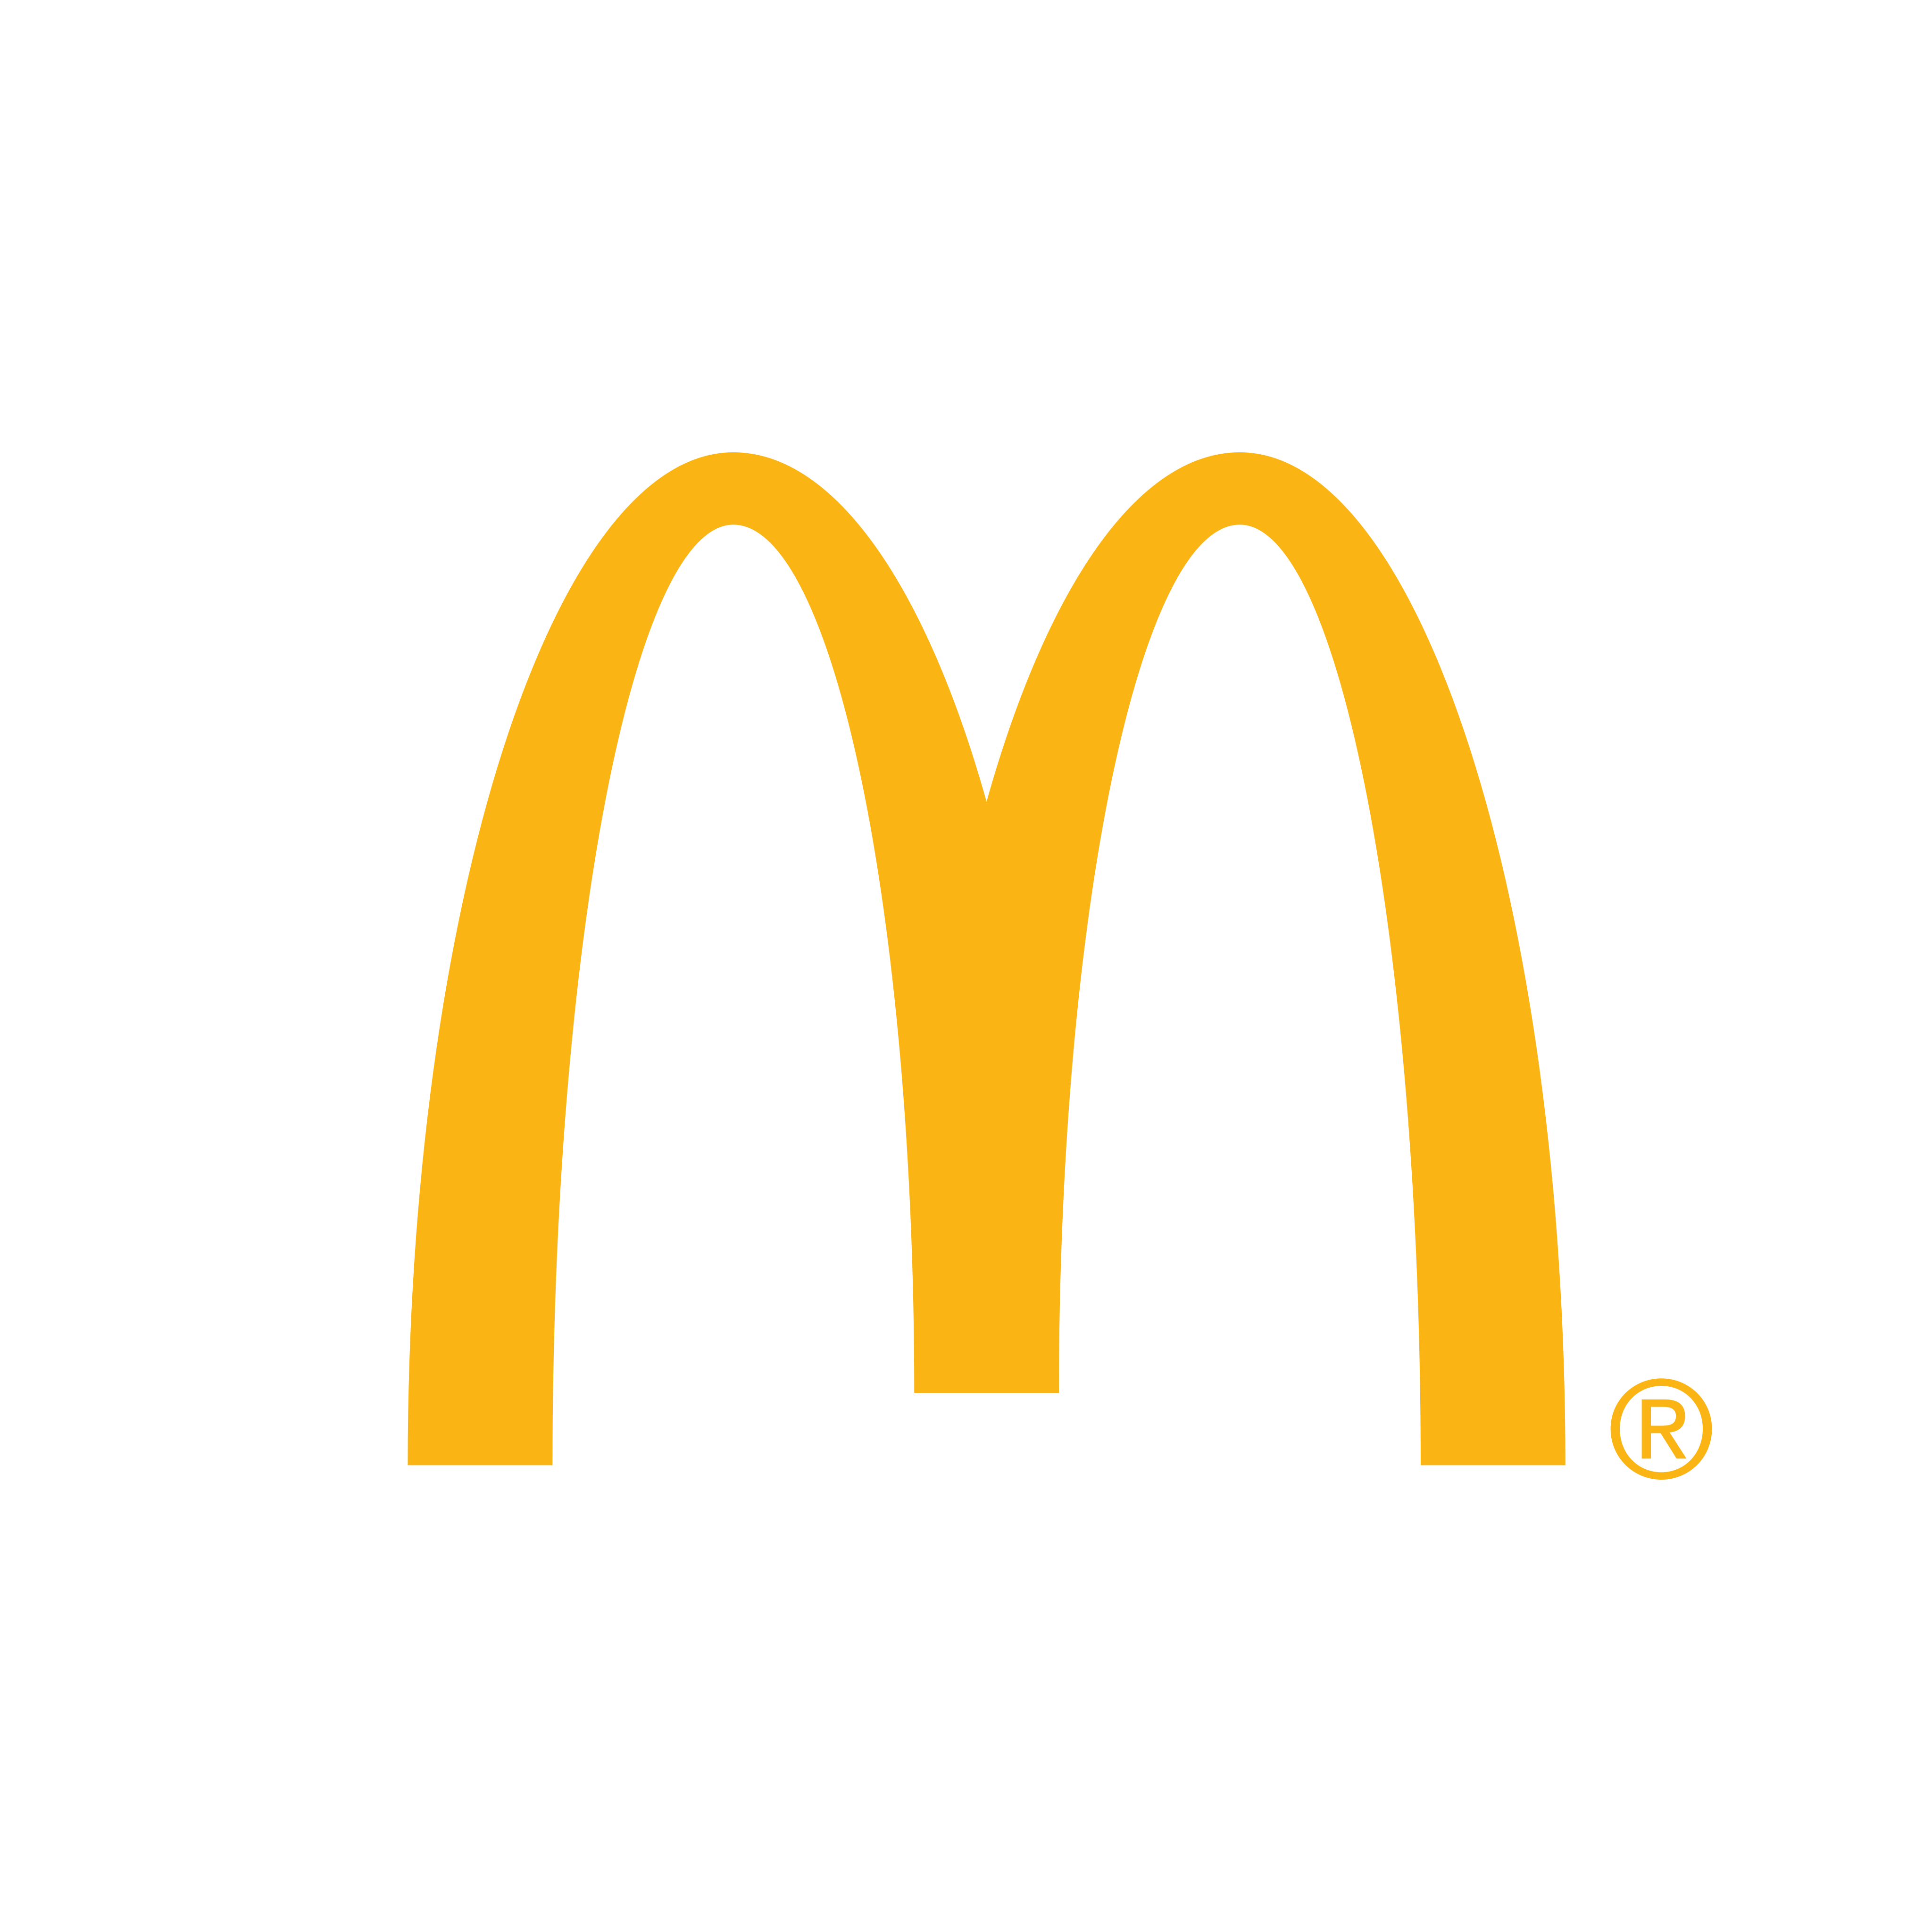 mcdonalds logo 0 - McDonald's Logo